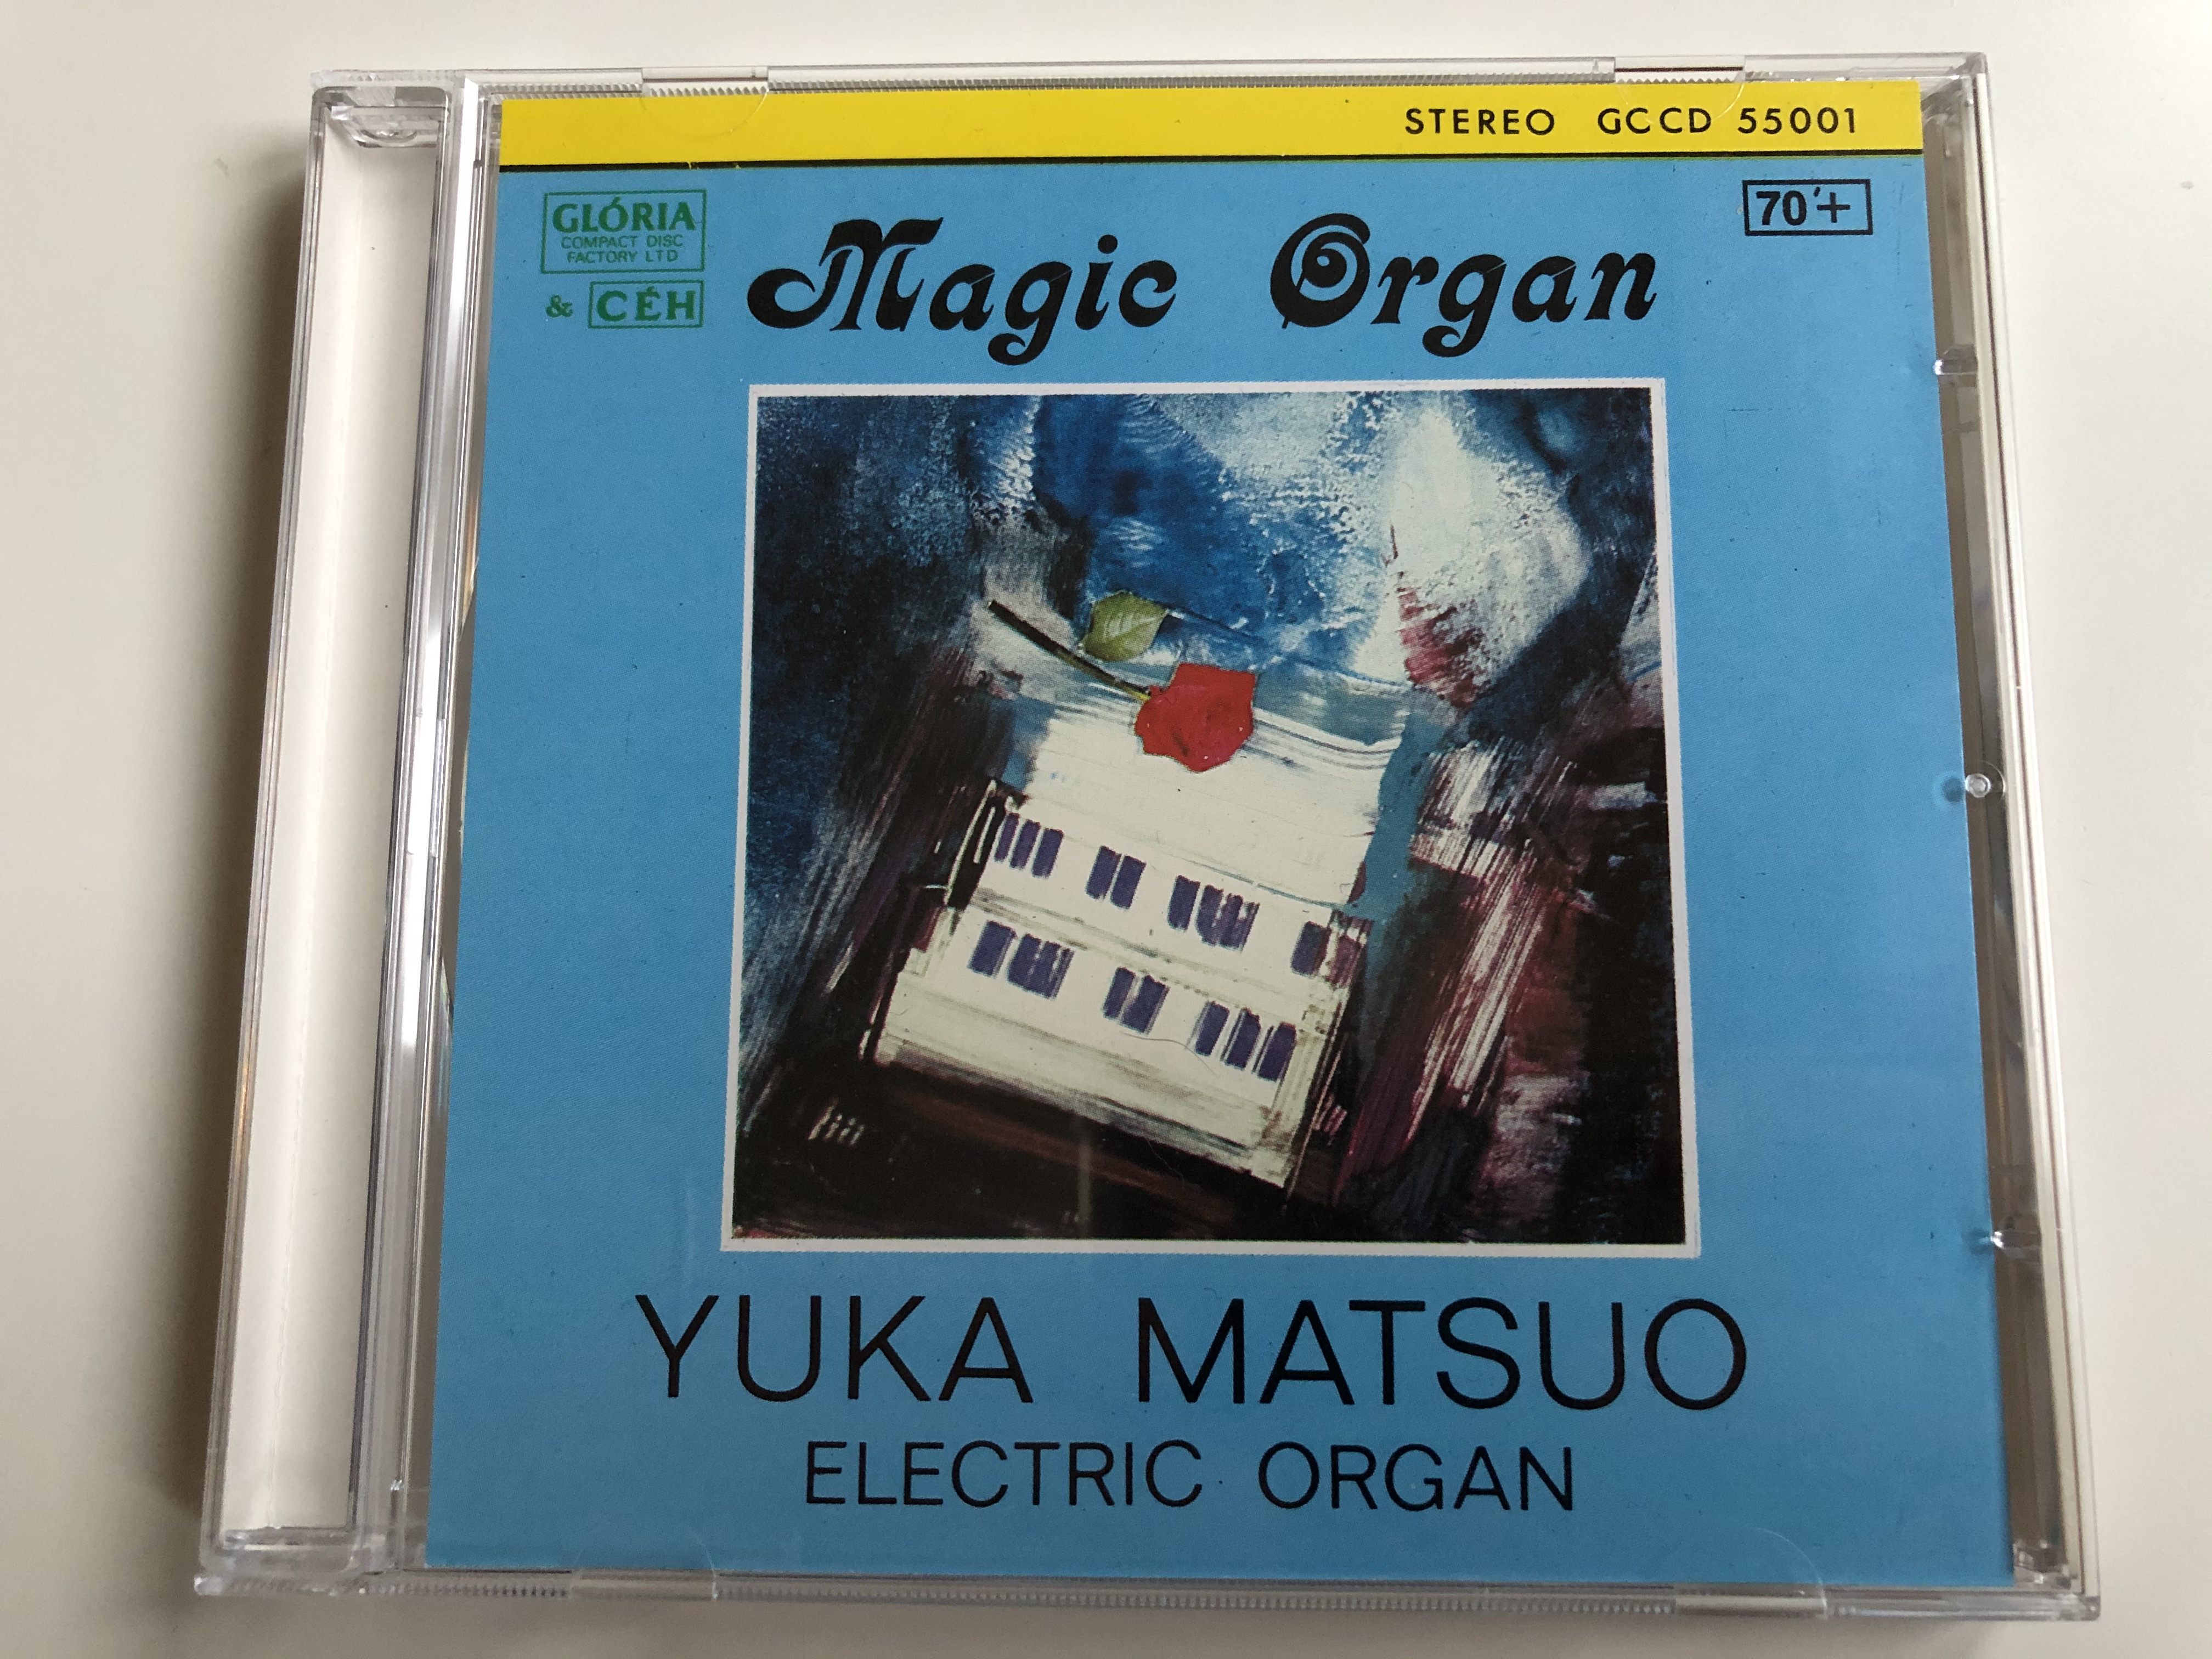 magic-organ-yuka-matsuo-electric-organ-gl-ria-audio-cd-1989-stereo-gccd-55001-1-.jpg